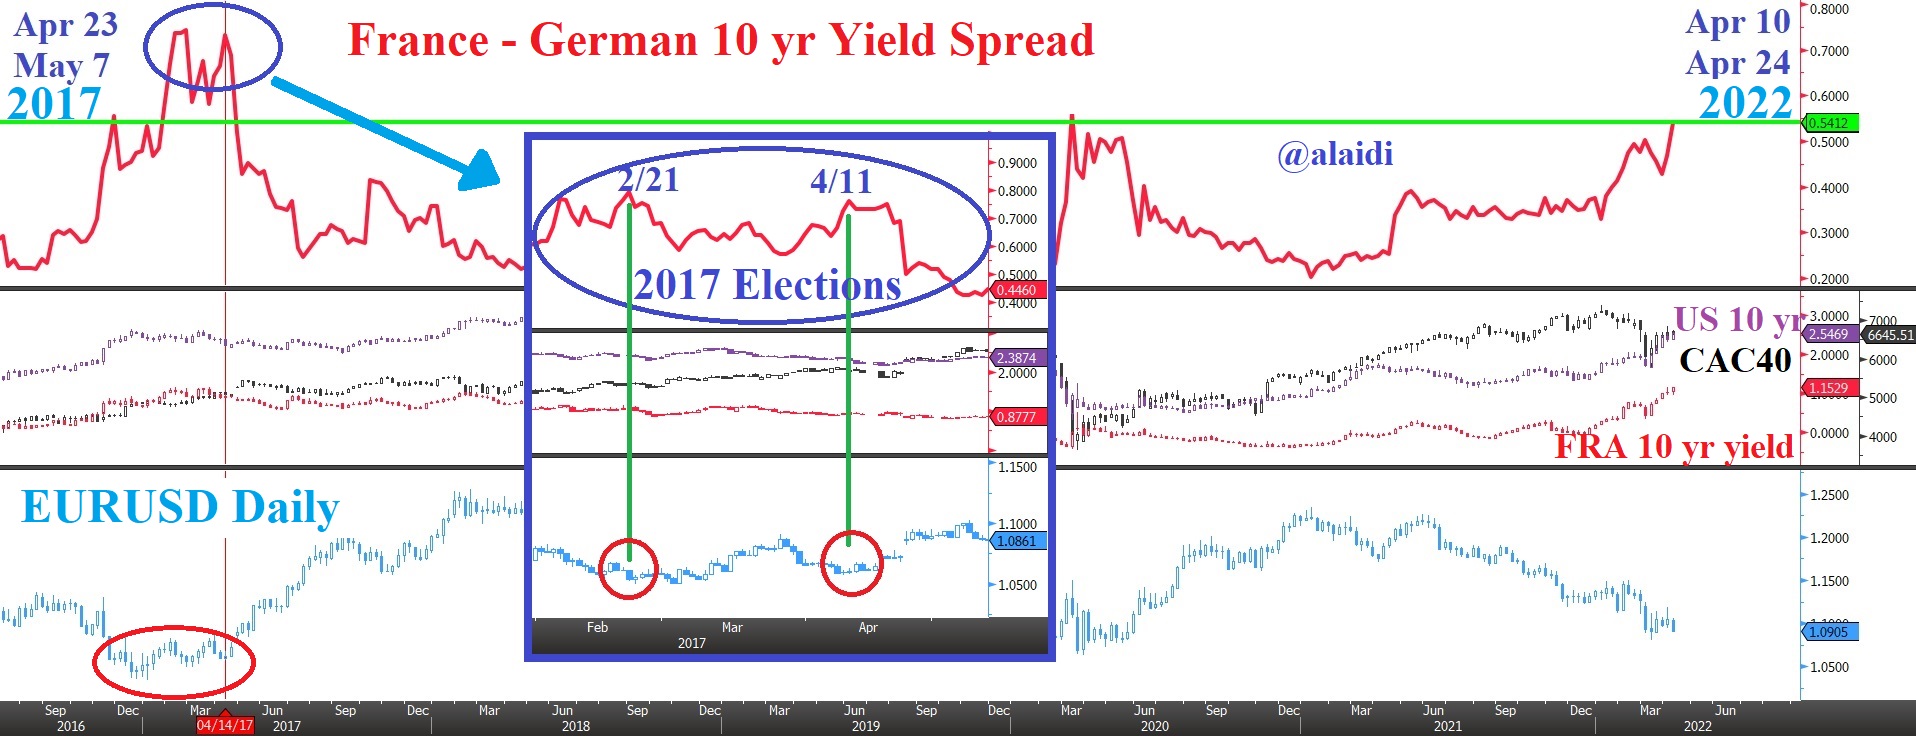 French - German 10 Year Yield Spread